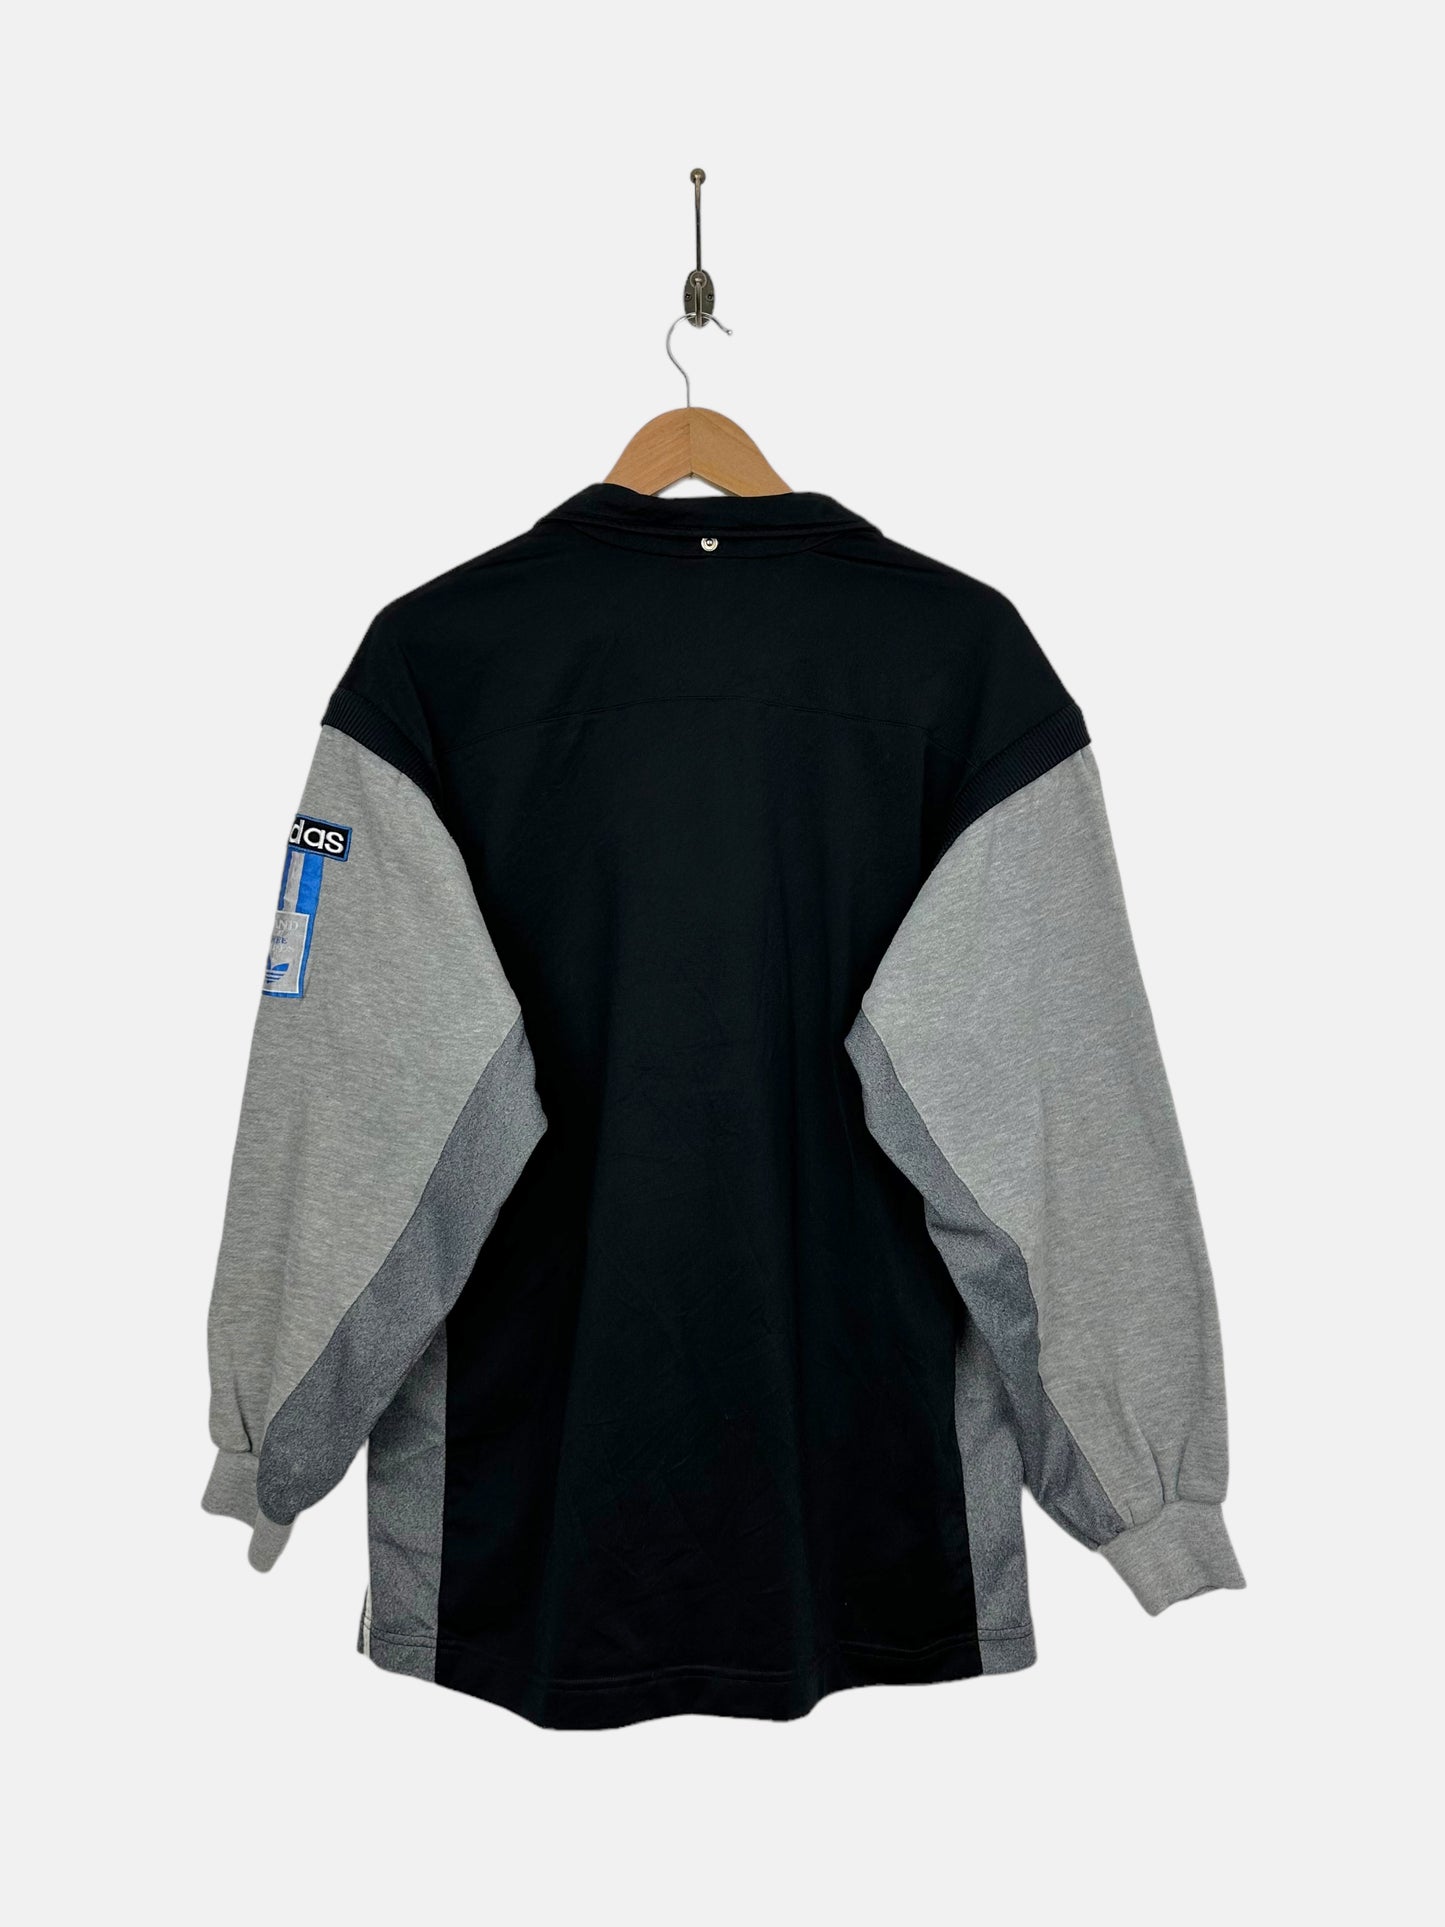 90's Adidas Embroidered Vintage Jacket/Sweatshirt Size S-M